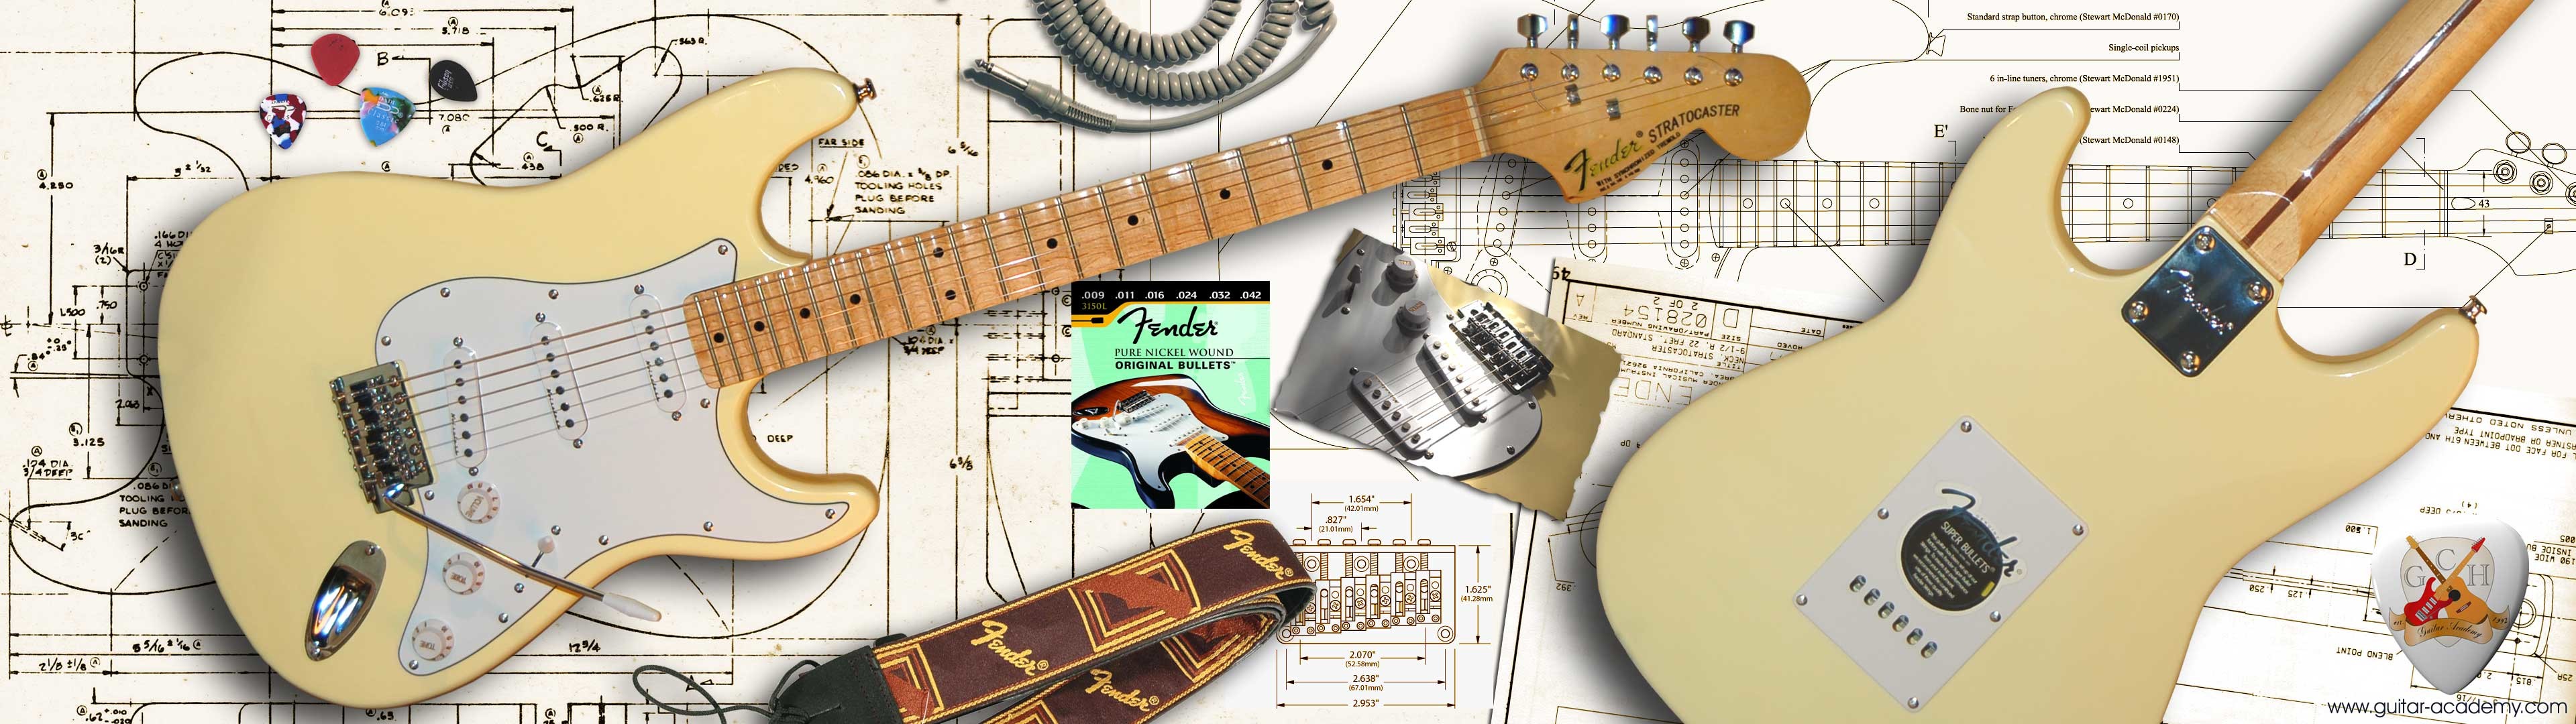 3840x1080 Guitar wallpaper for dual monitors, Blonde fender stratocaster